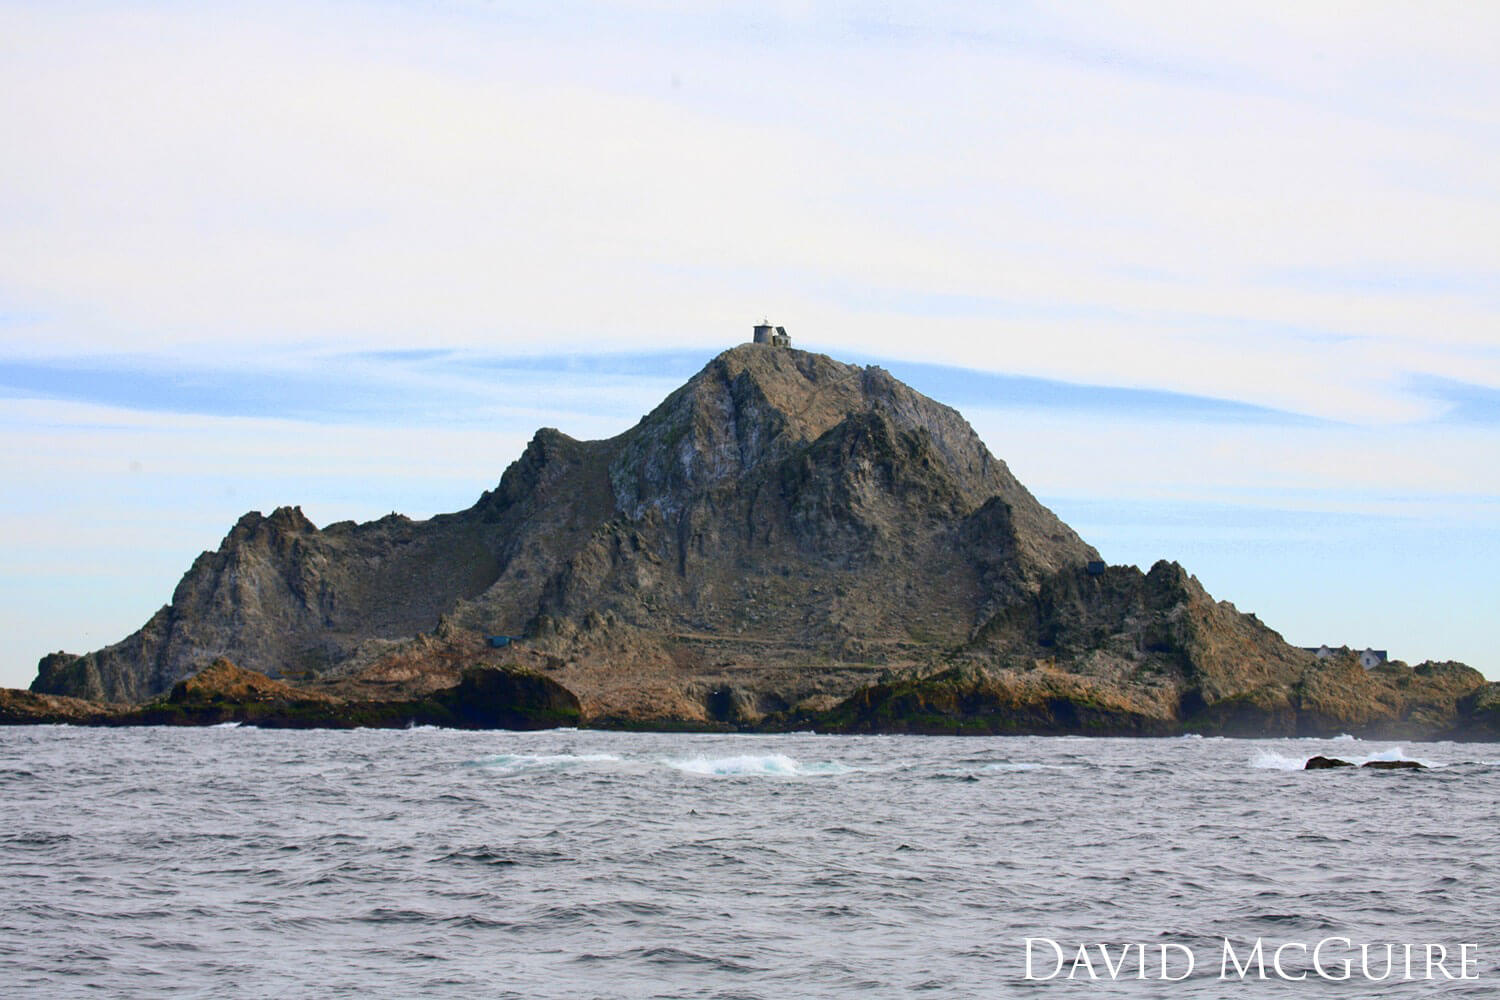 Lighthouse atop a rocky island.